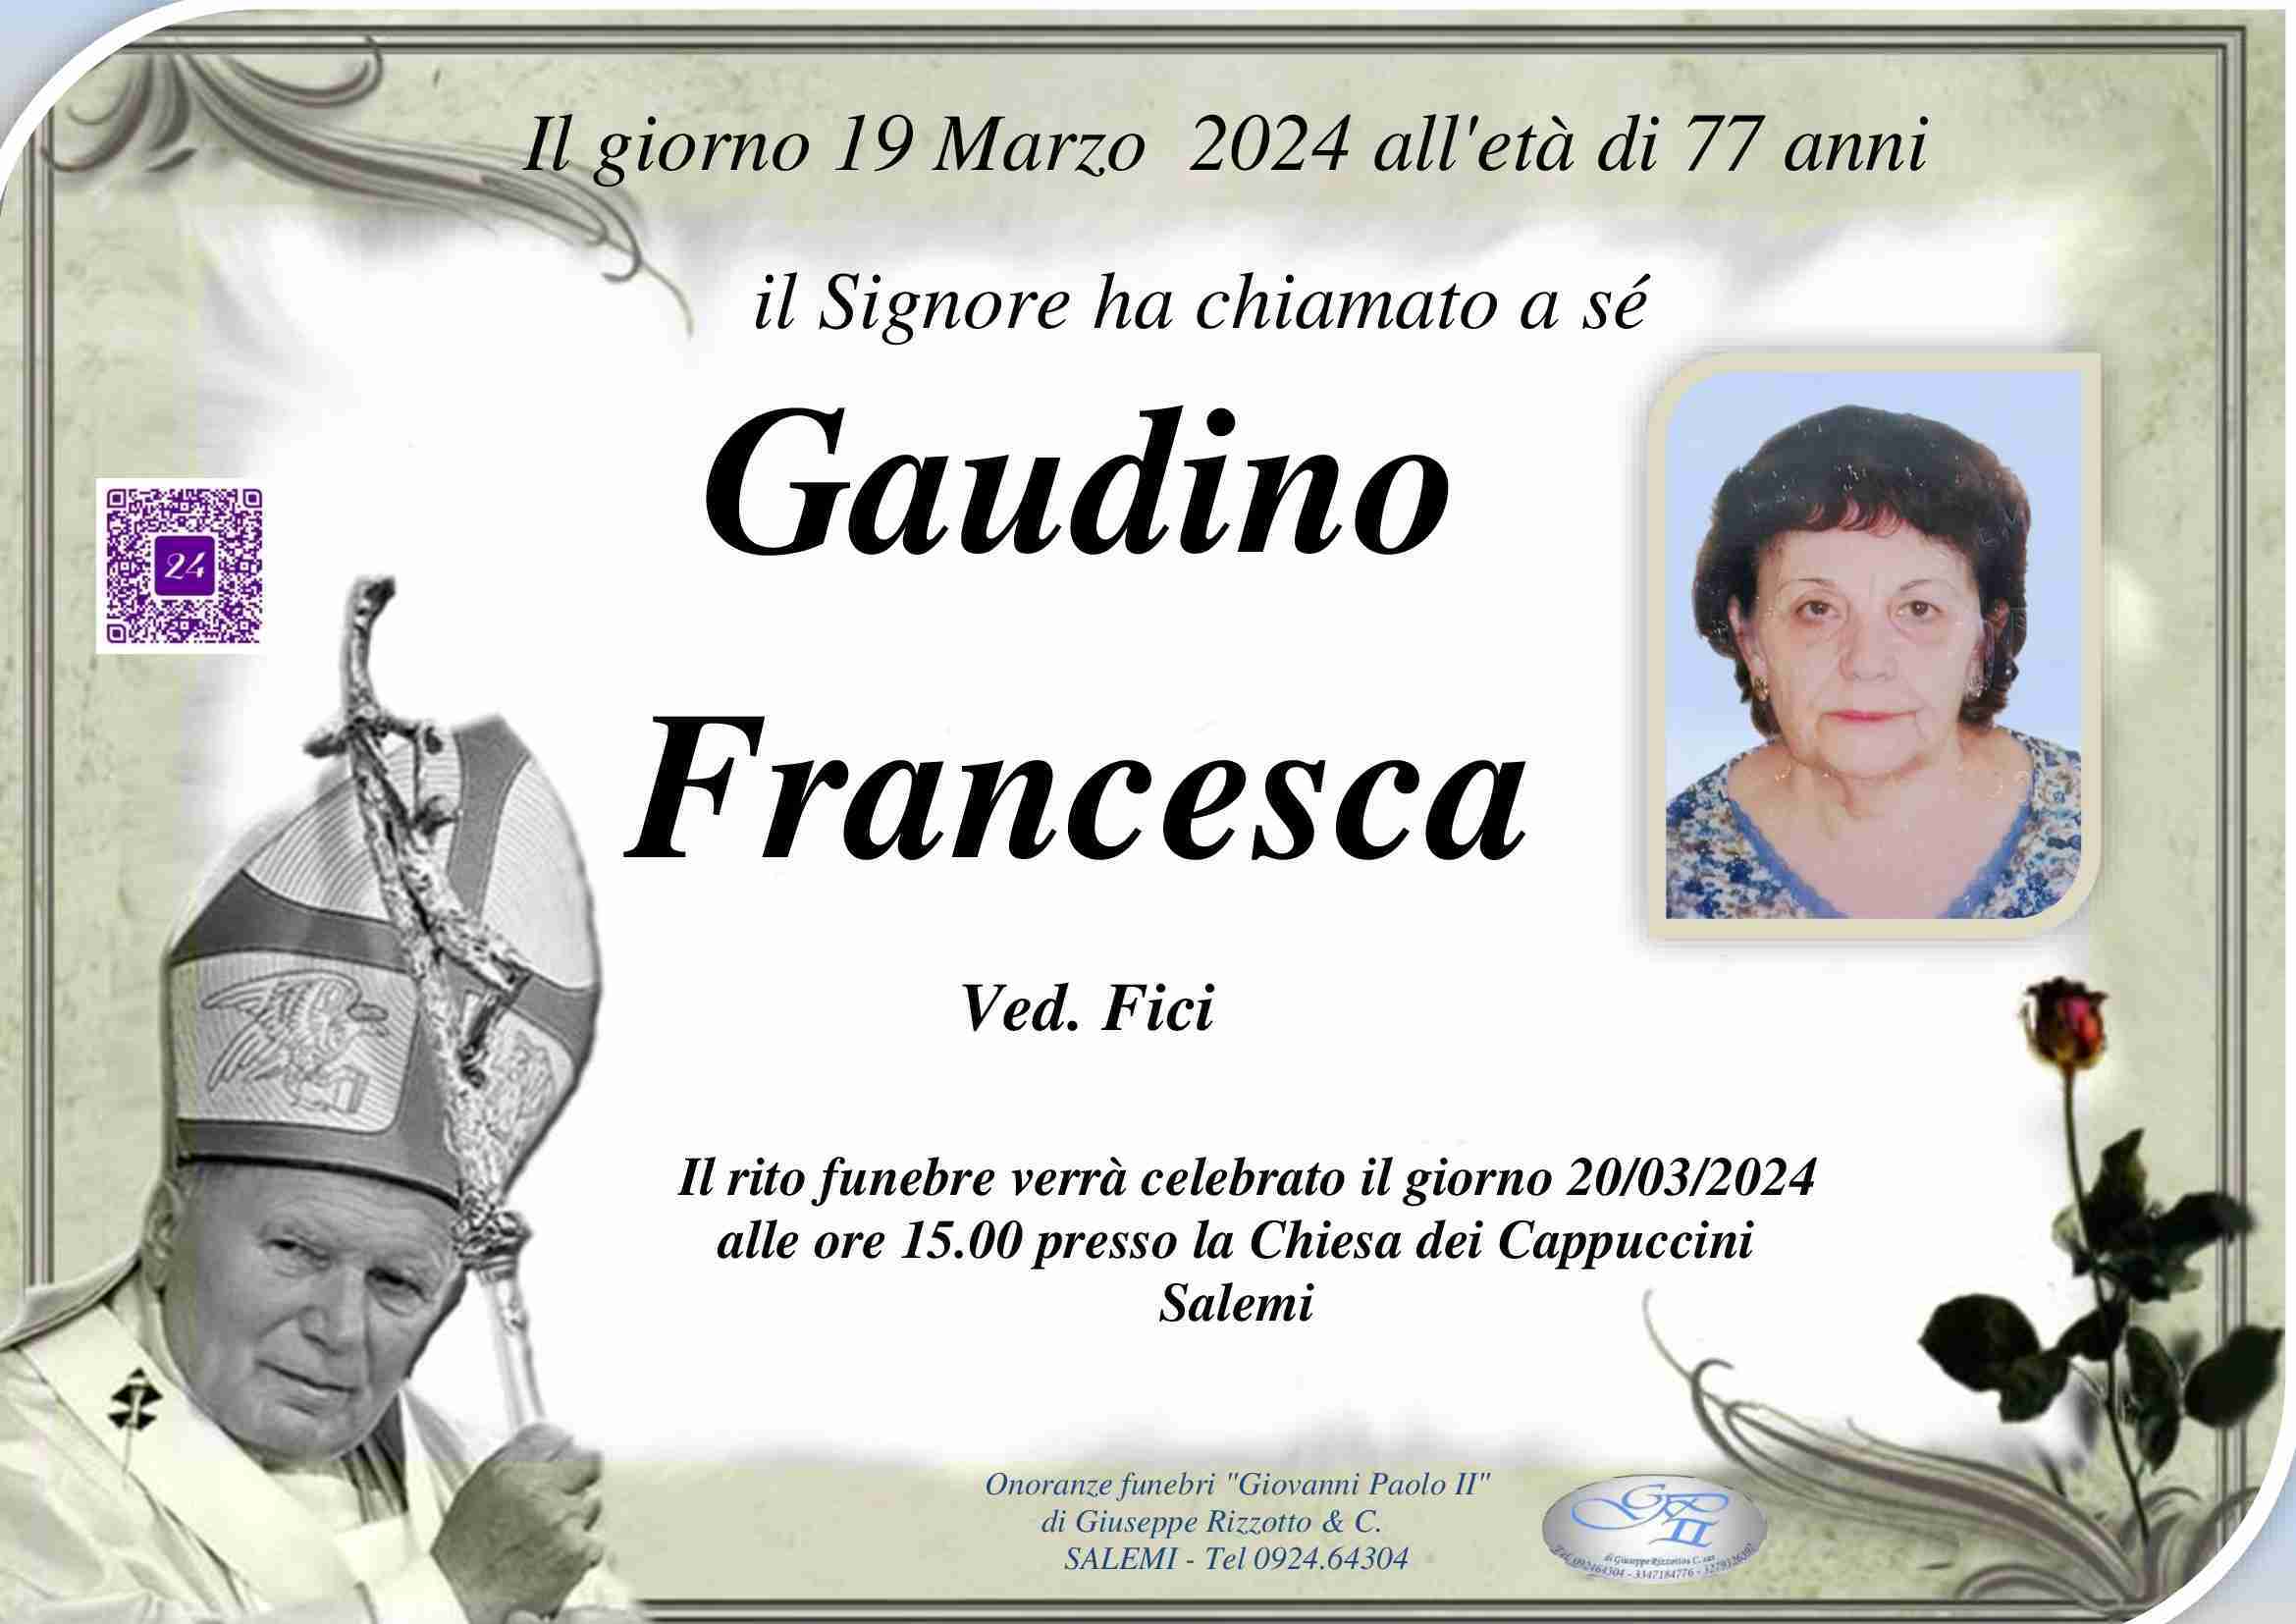 Francesca Gaudino